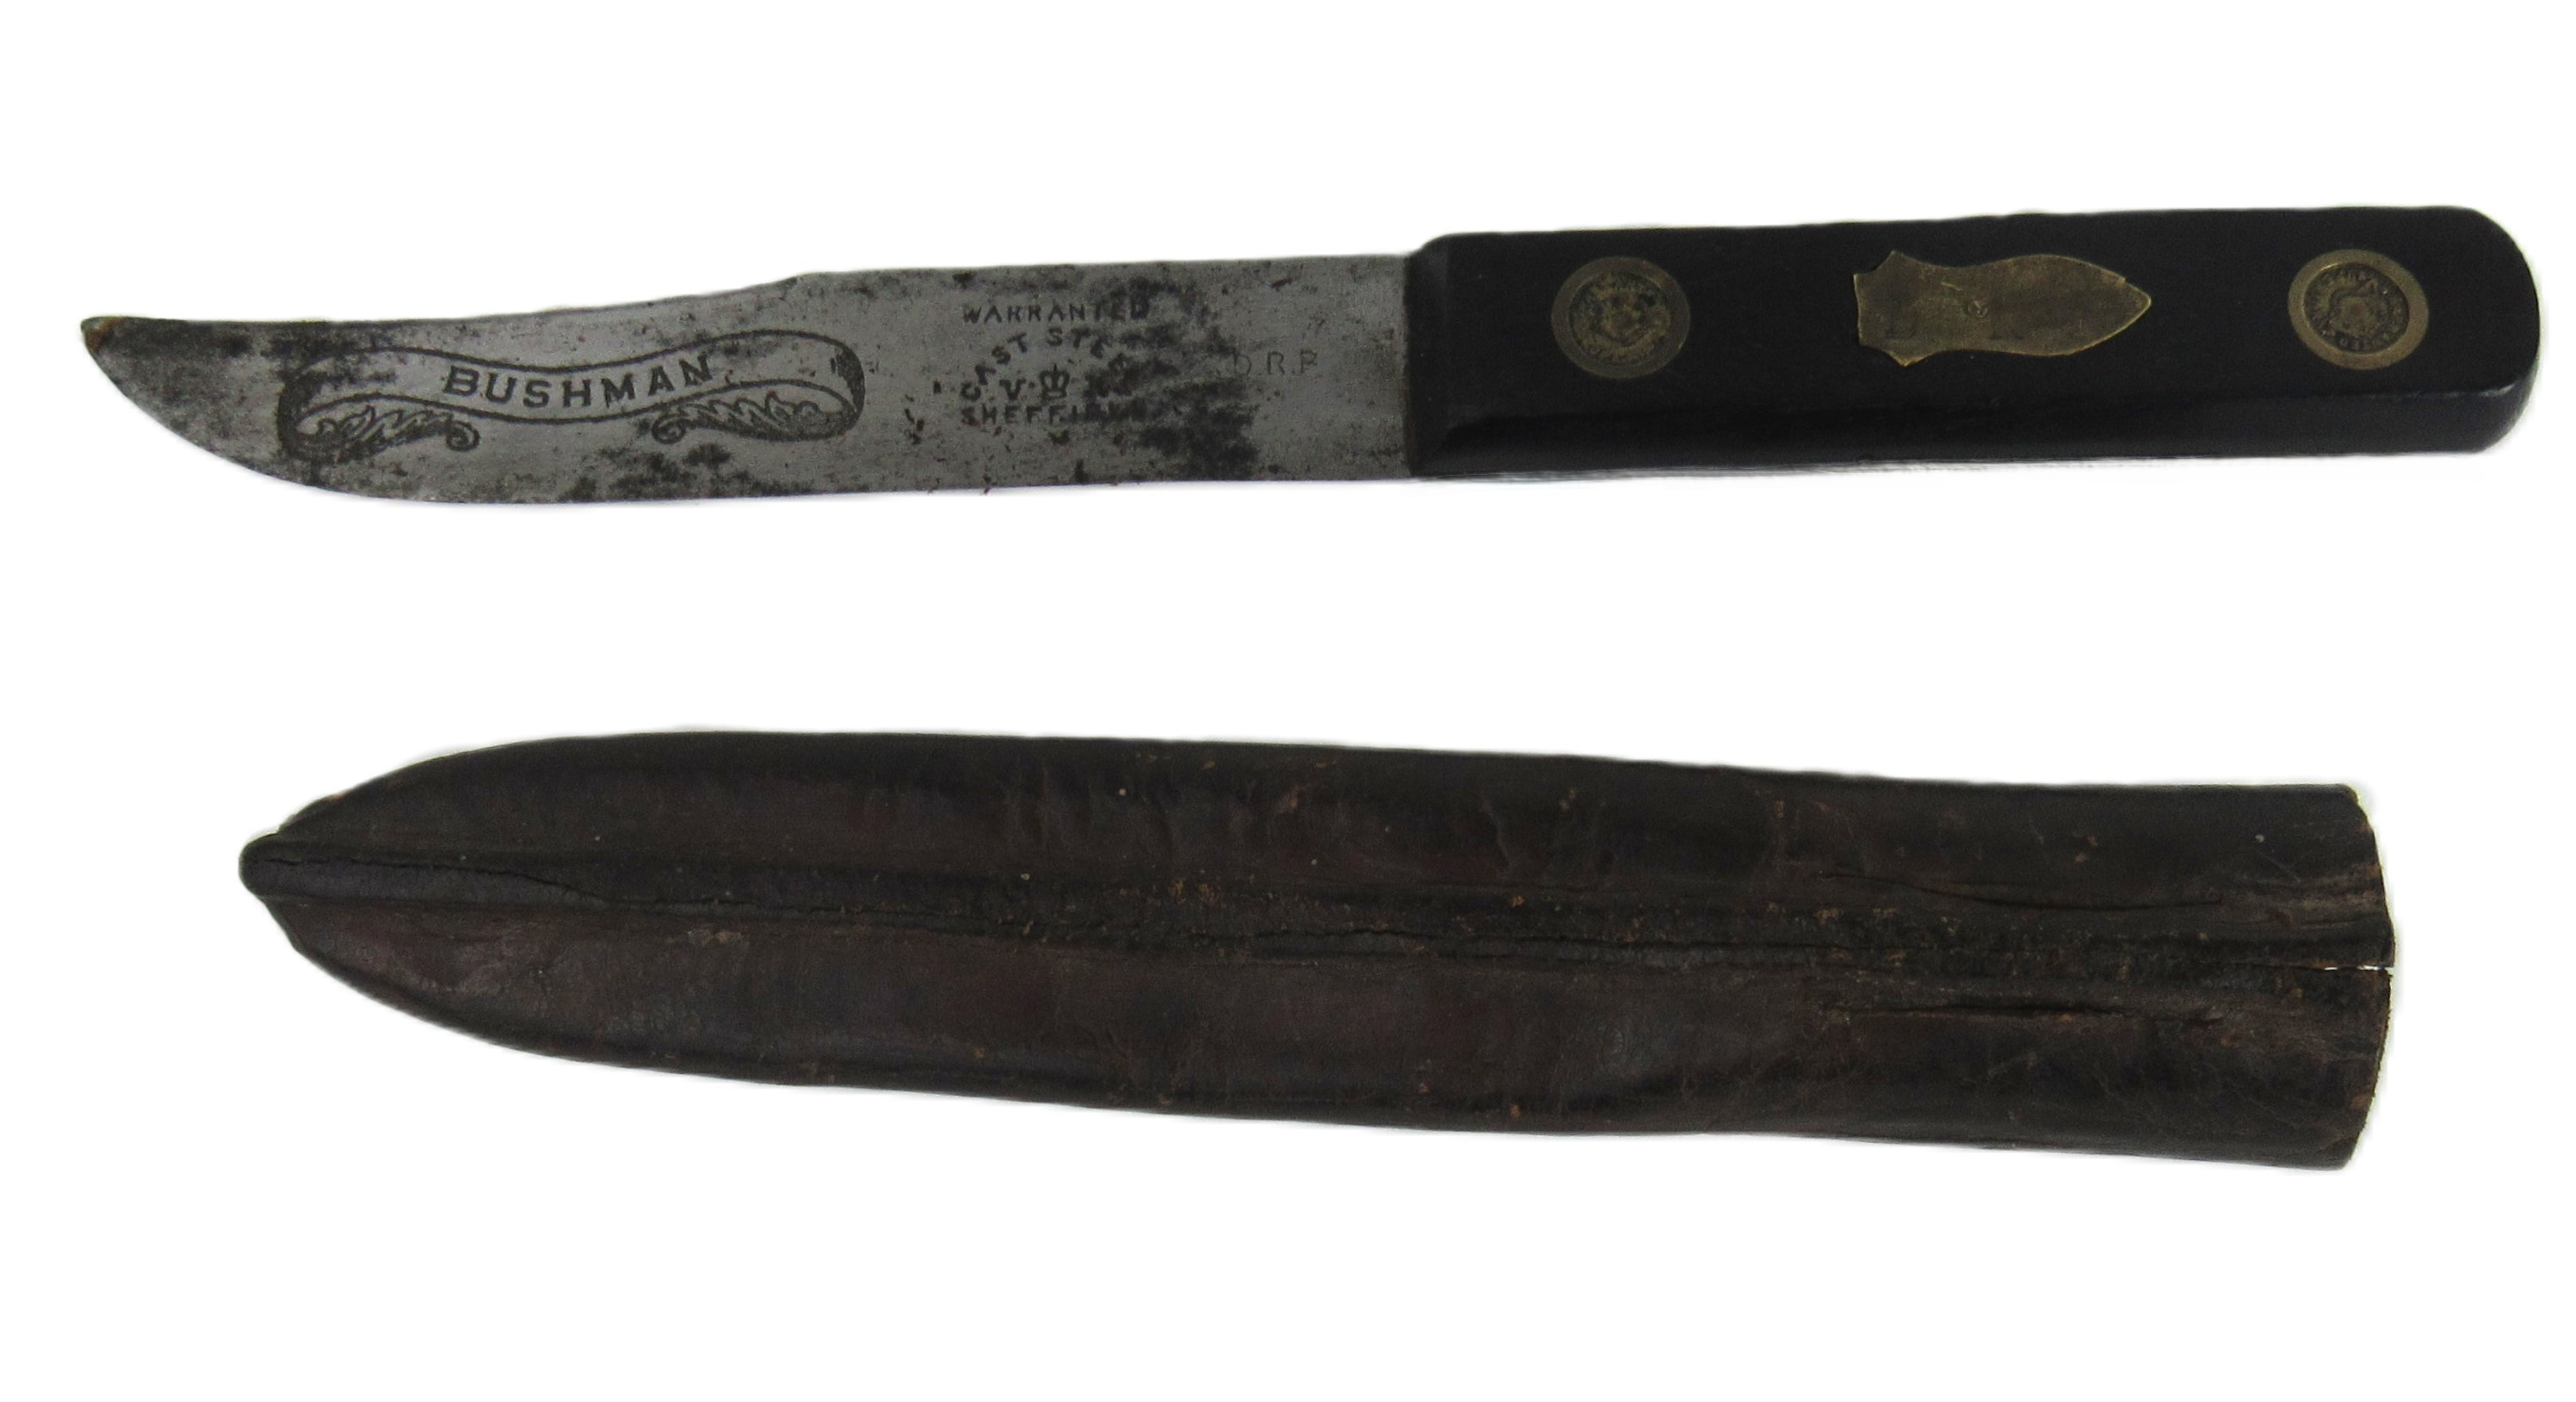 Militaria: A Victorian 'Bushman' Hunting or Fighting Knife, marked warranted cast steel, - Bild 2 aus 2